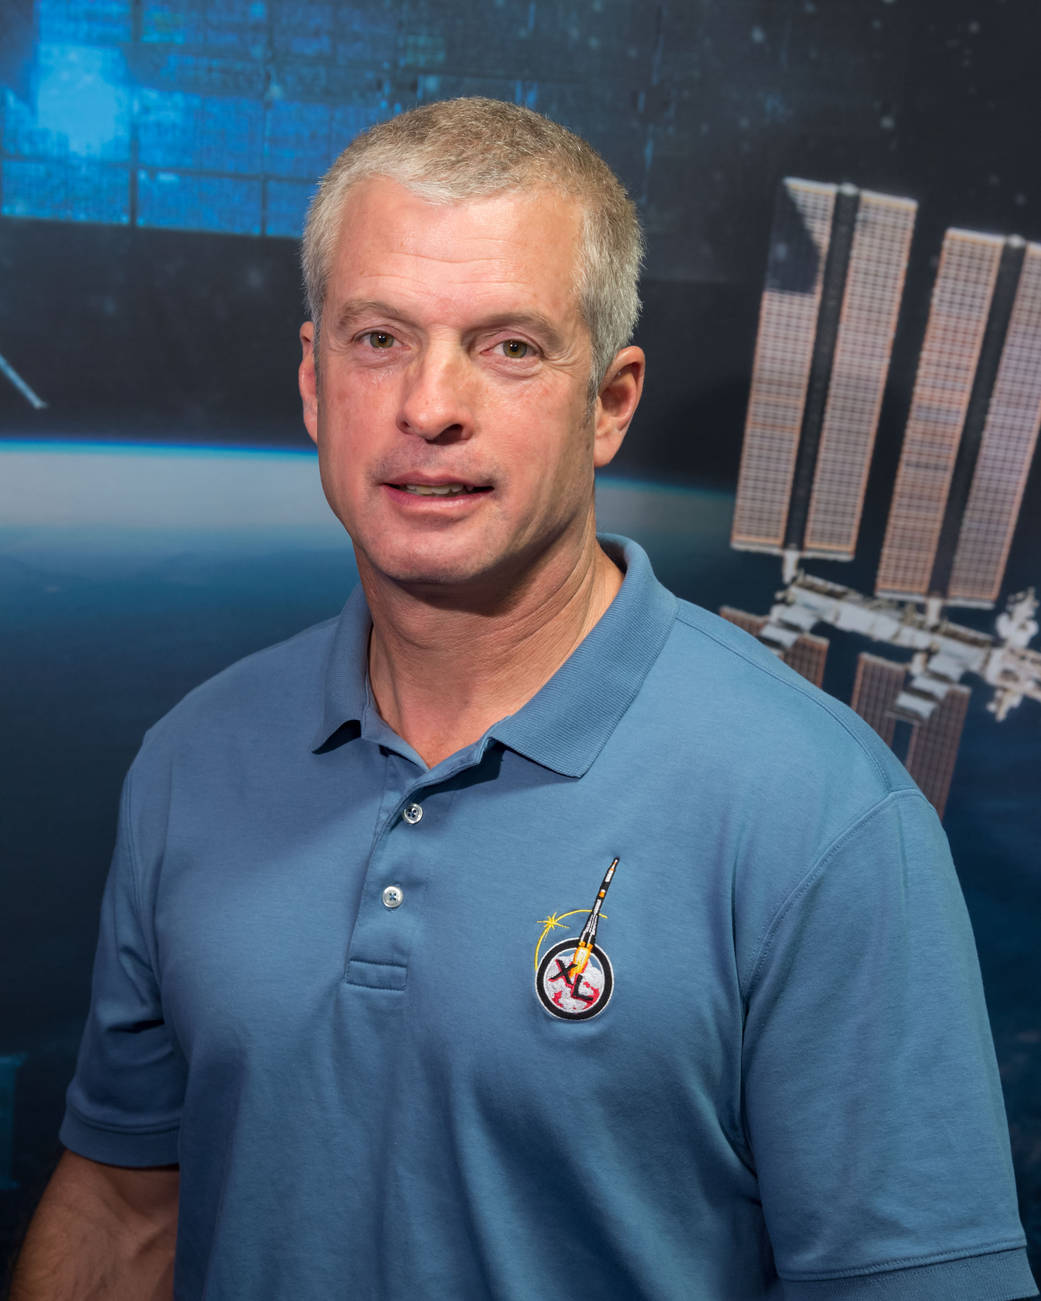 NASA Astronaut Steve Swanson